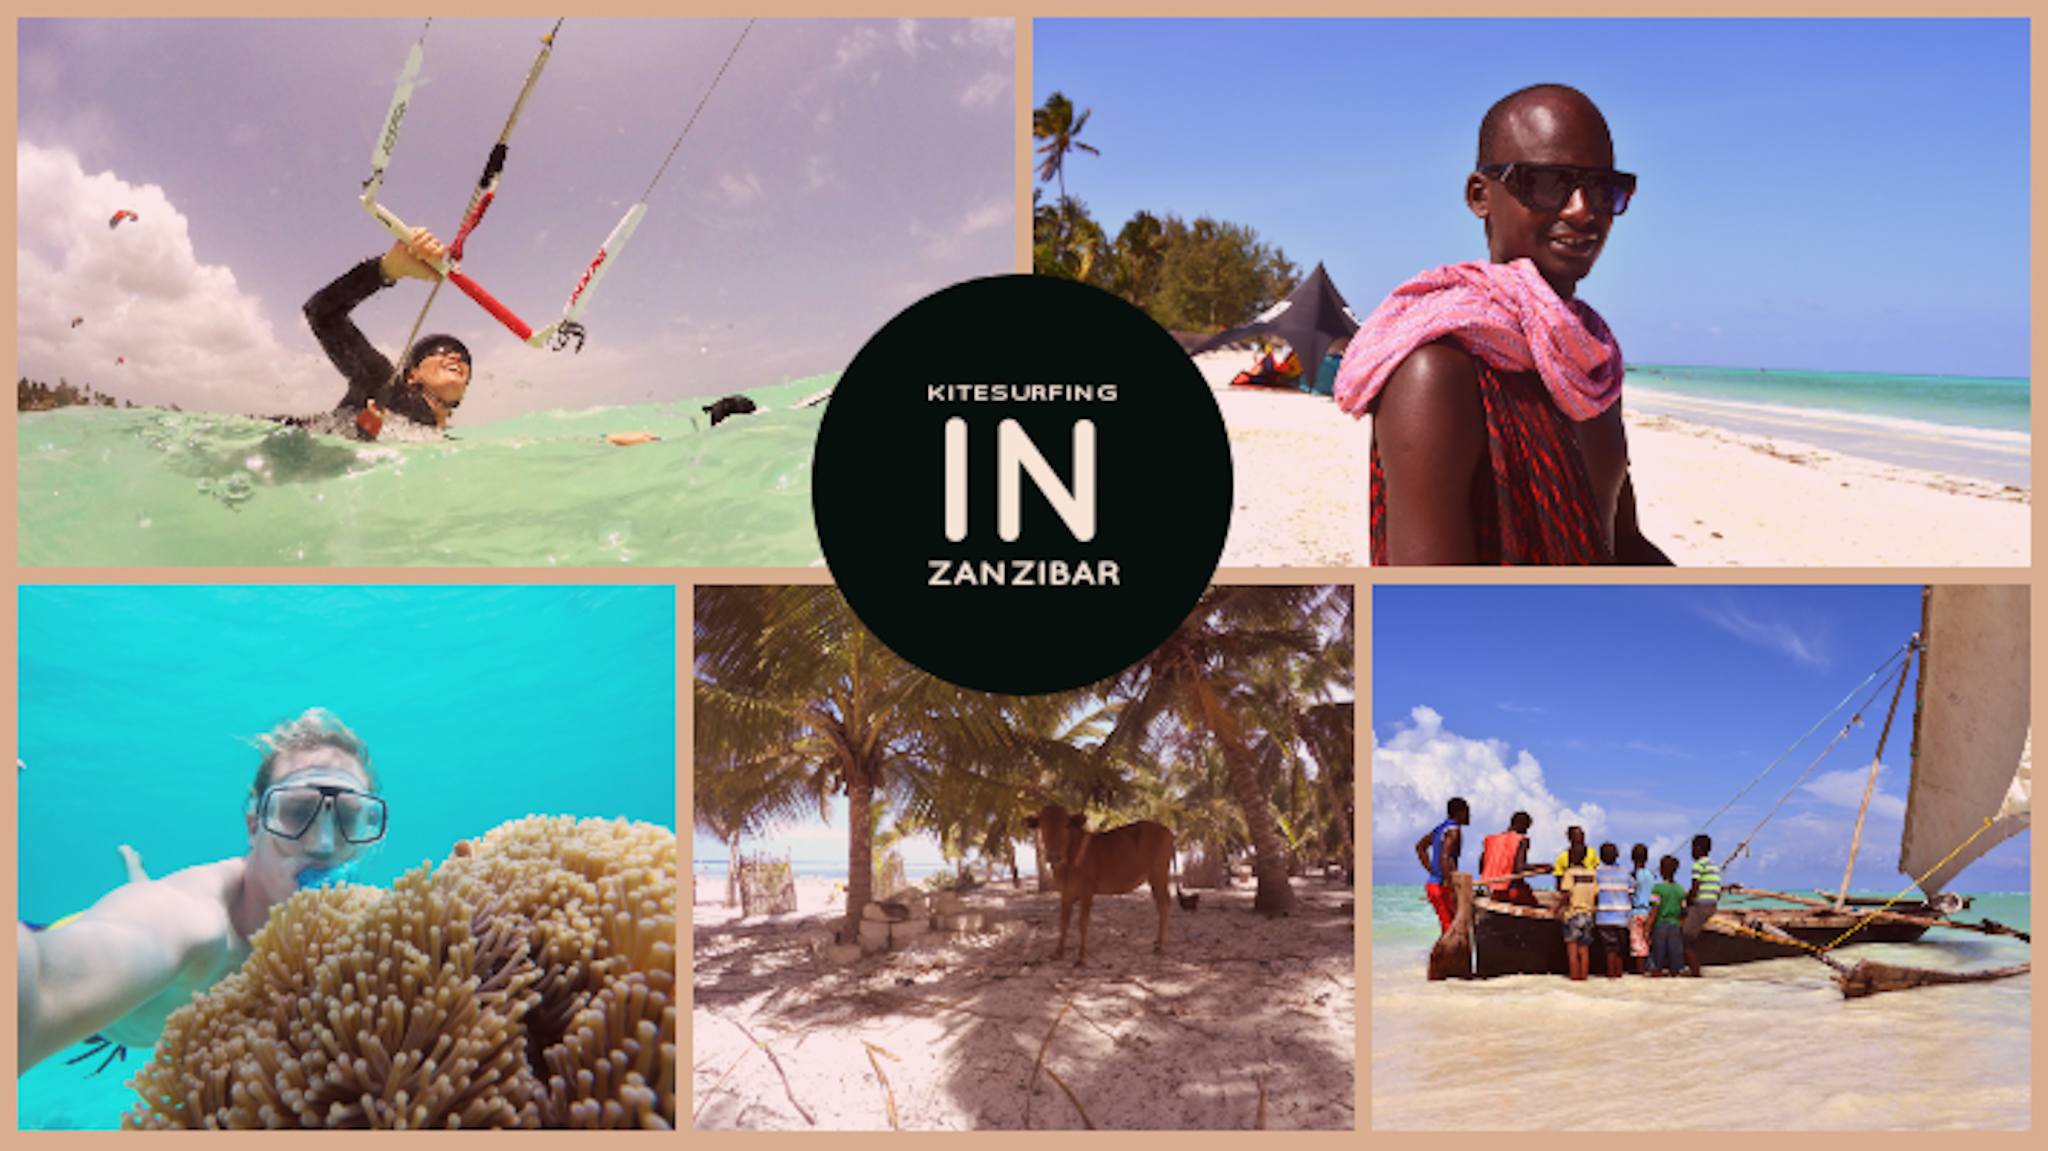 Top Kitesurf Destination For 2020 - Zanzibar